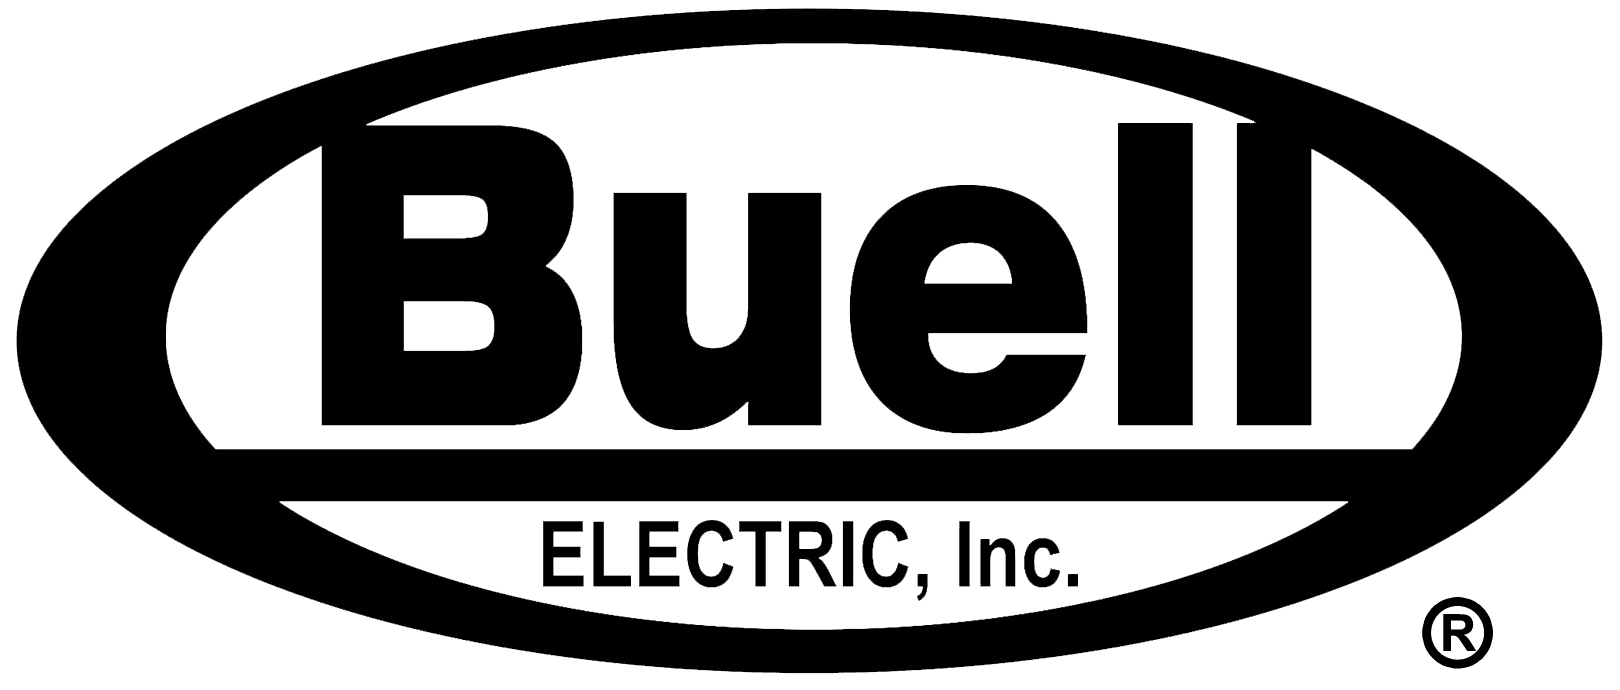 Buell Electric Dunedin